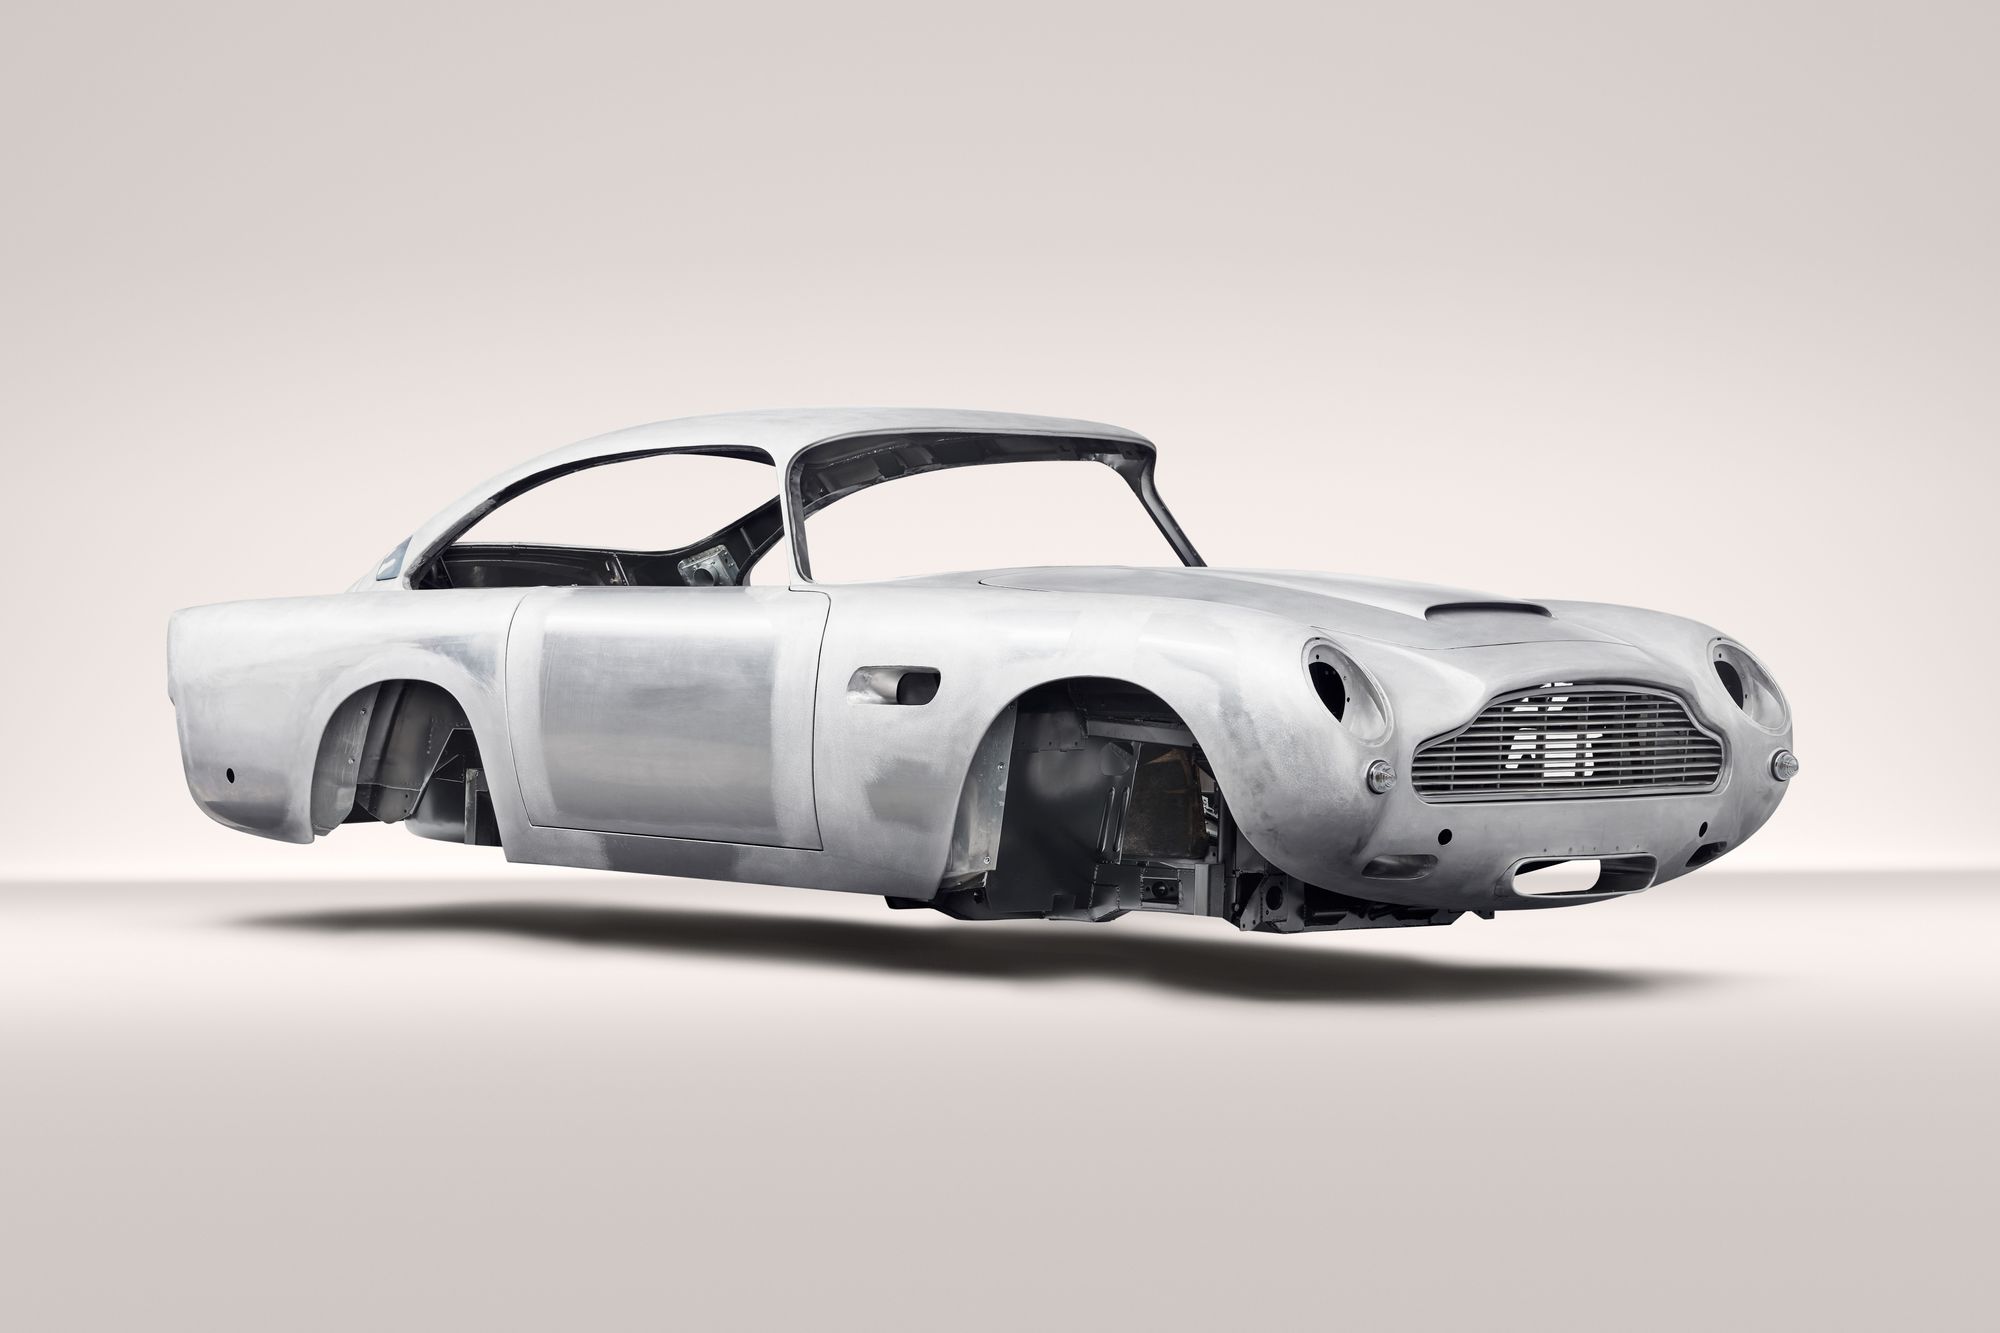 1964 Aston Martin DB5 Restoration